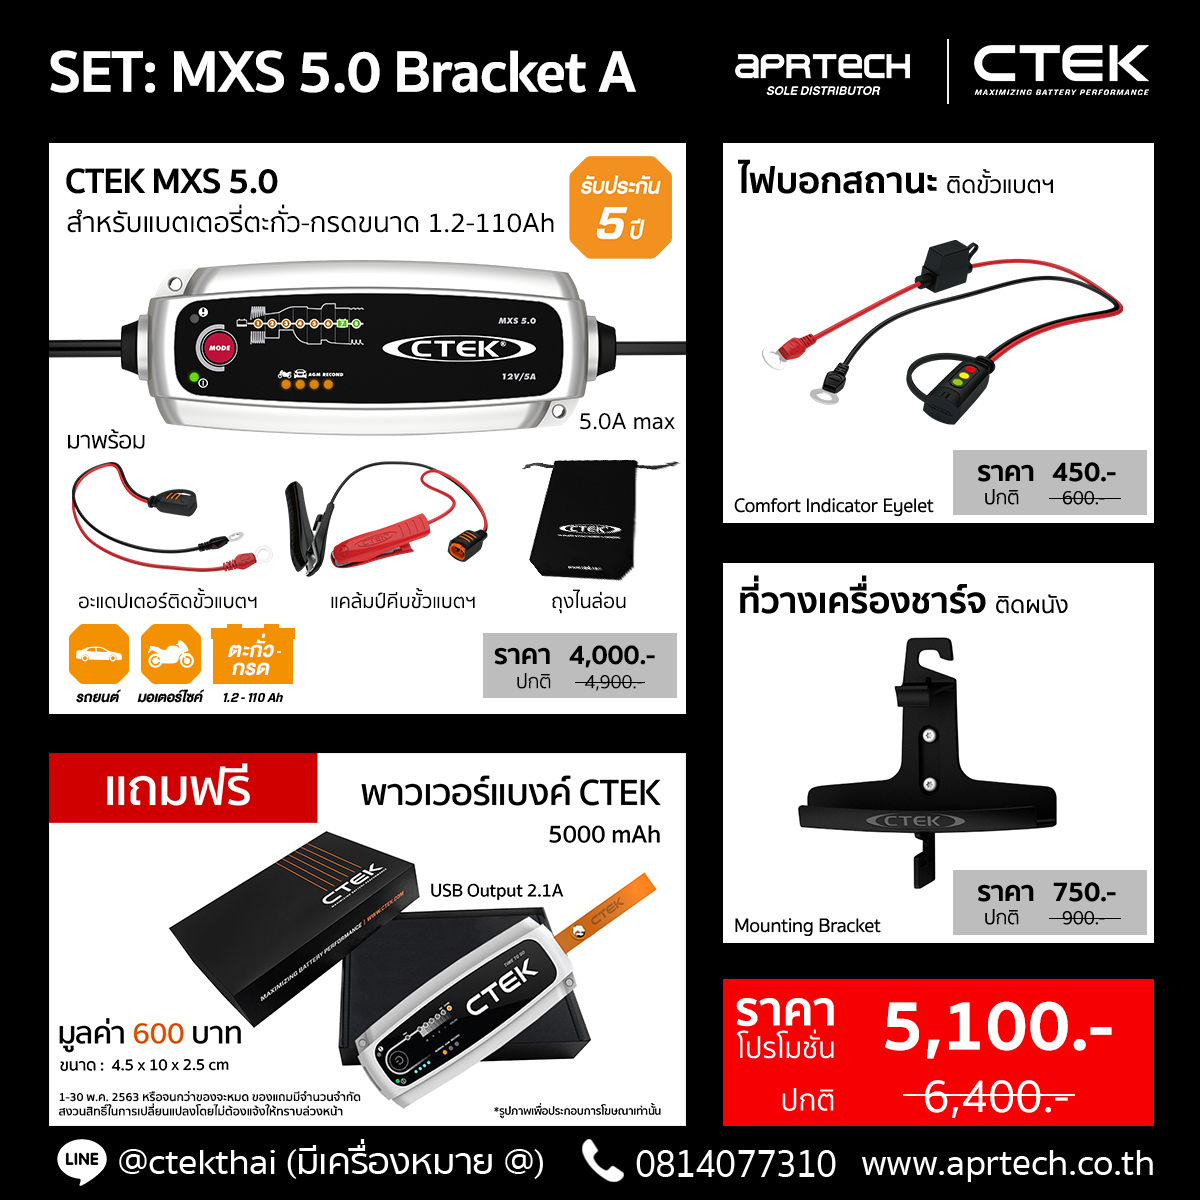 SET MXS 5.0 Bracket A (CTEK MXS 5.0 + Indicator Eyelet + Mounting Bracket)